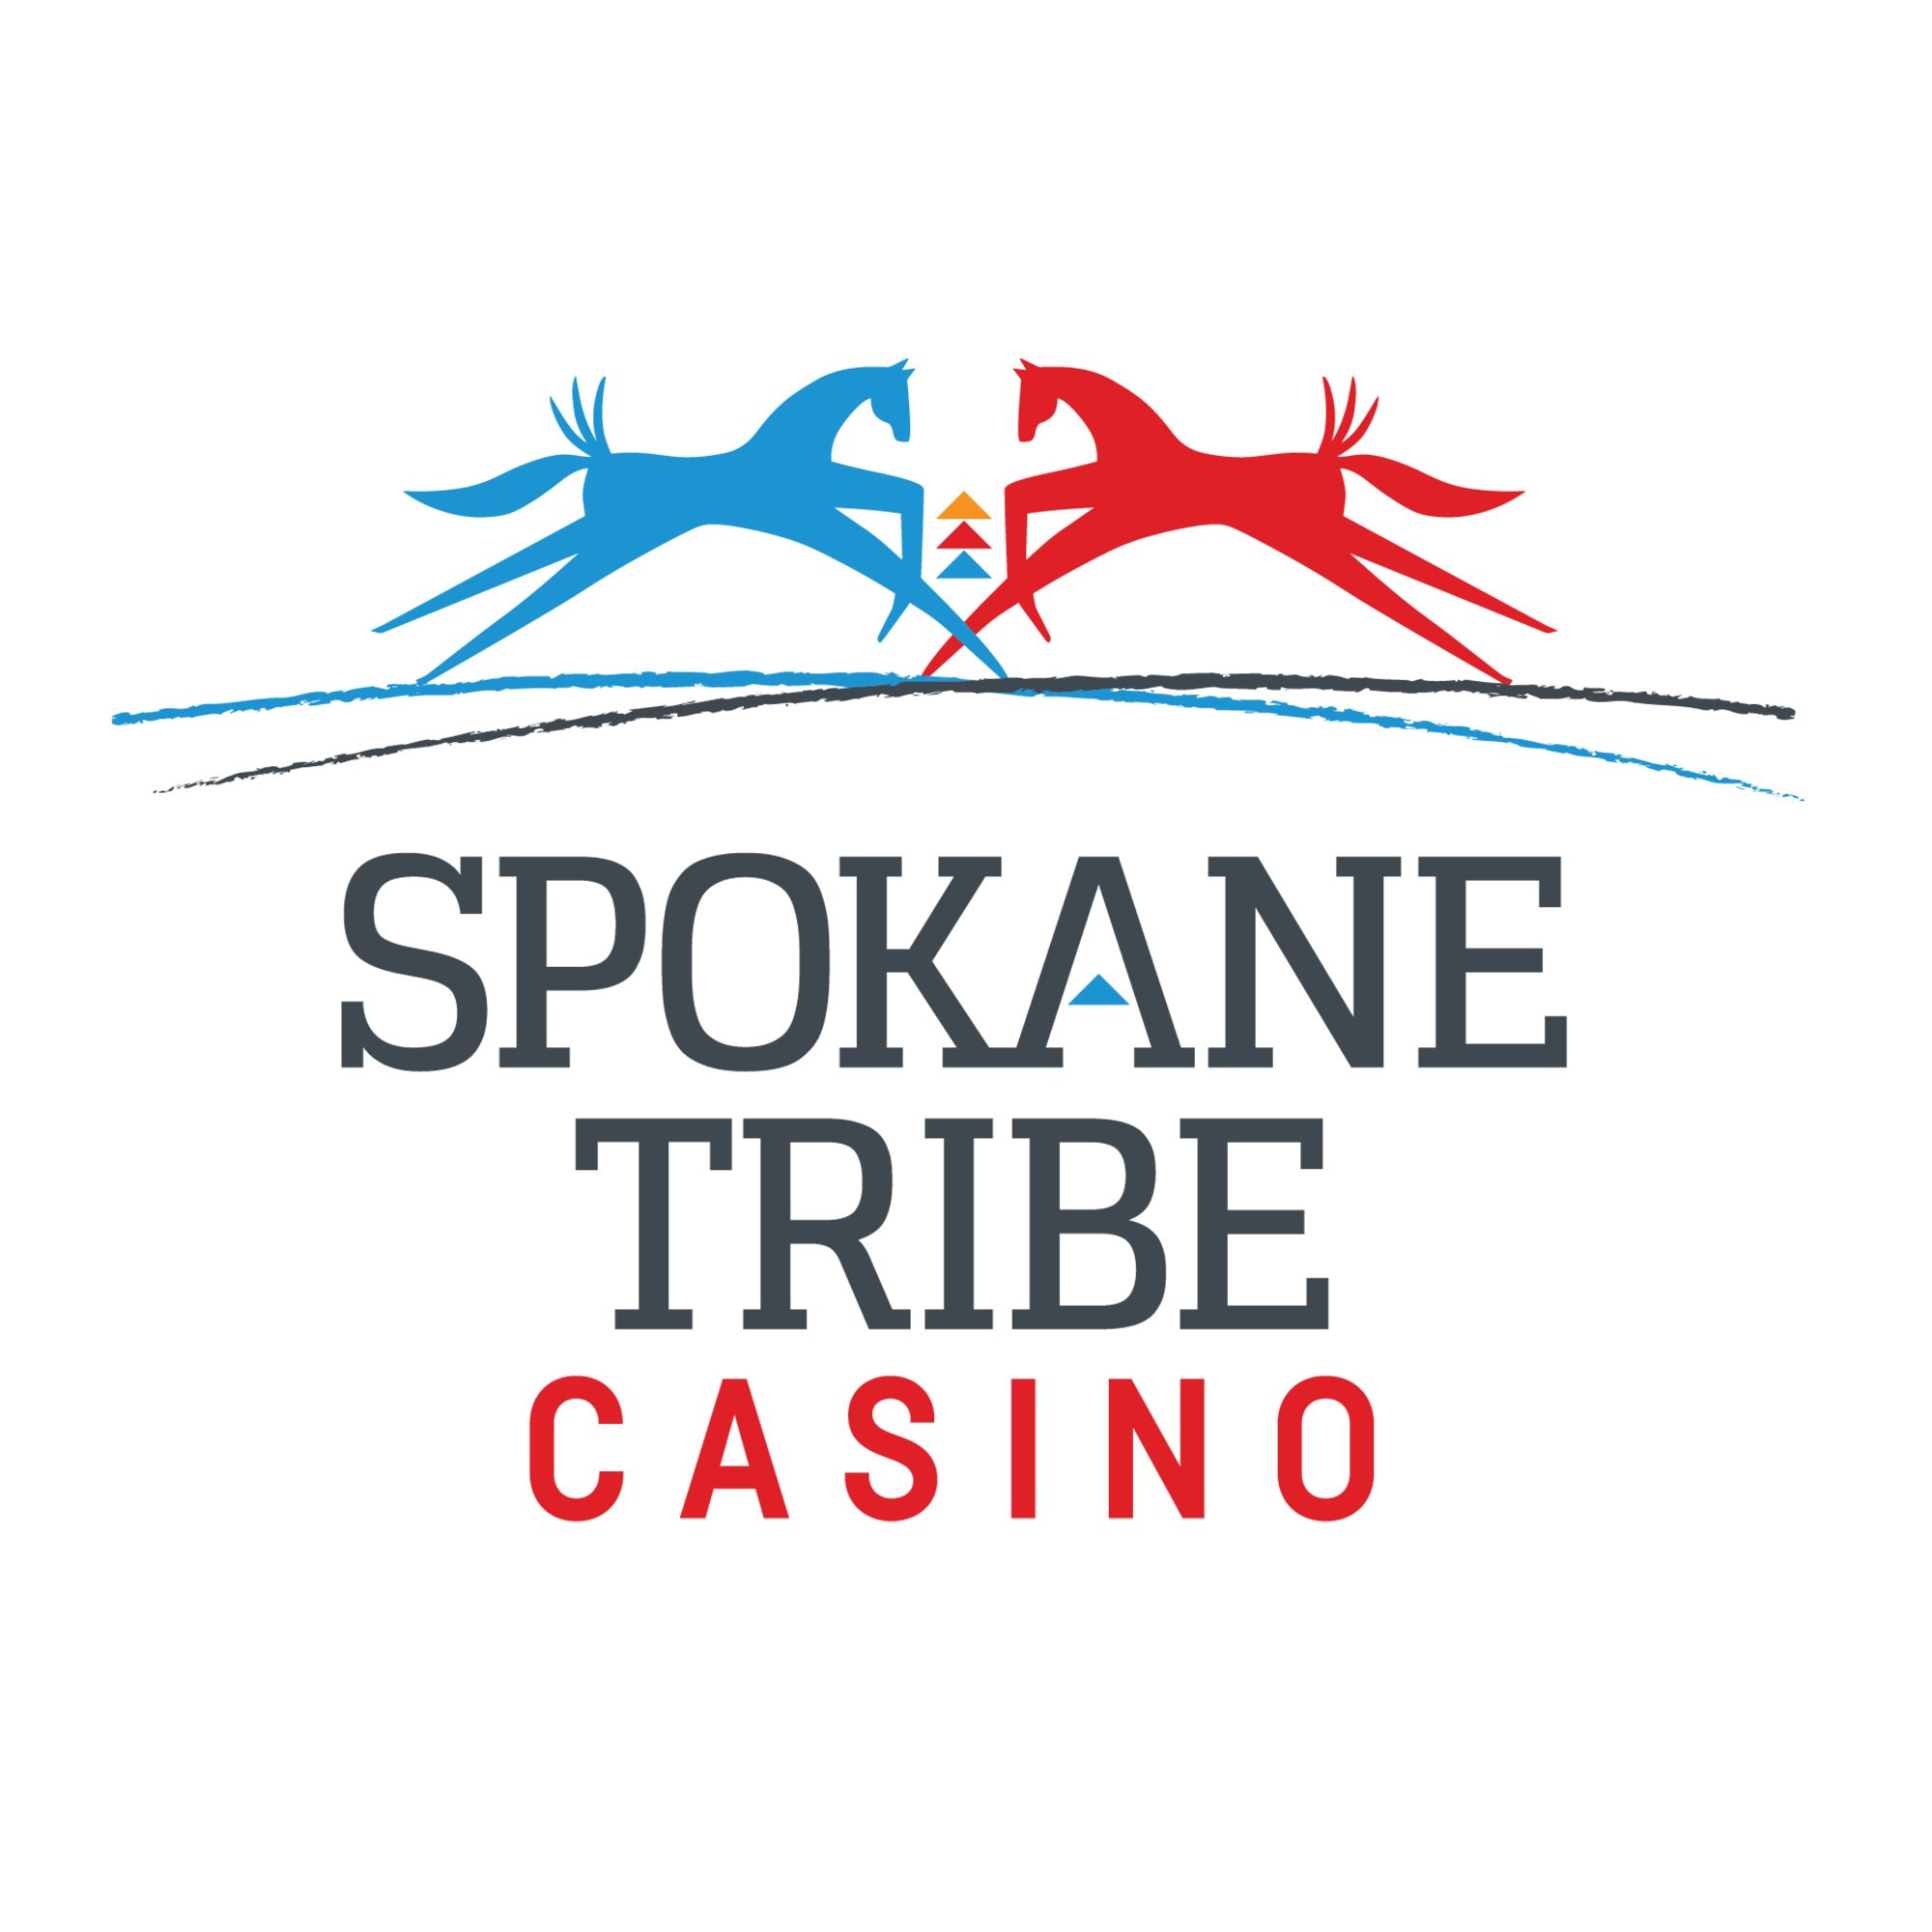 spokane tribe casino age limit